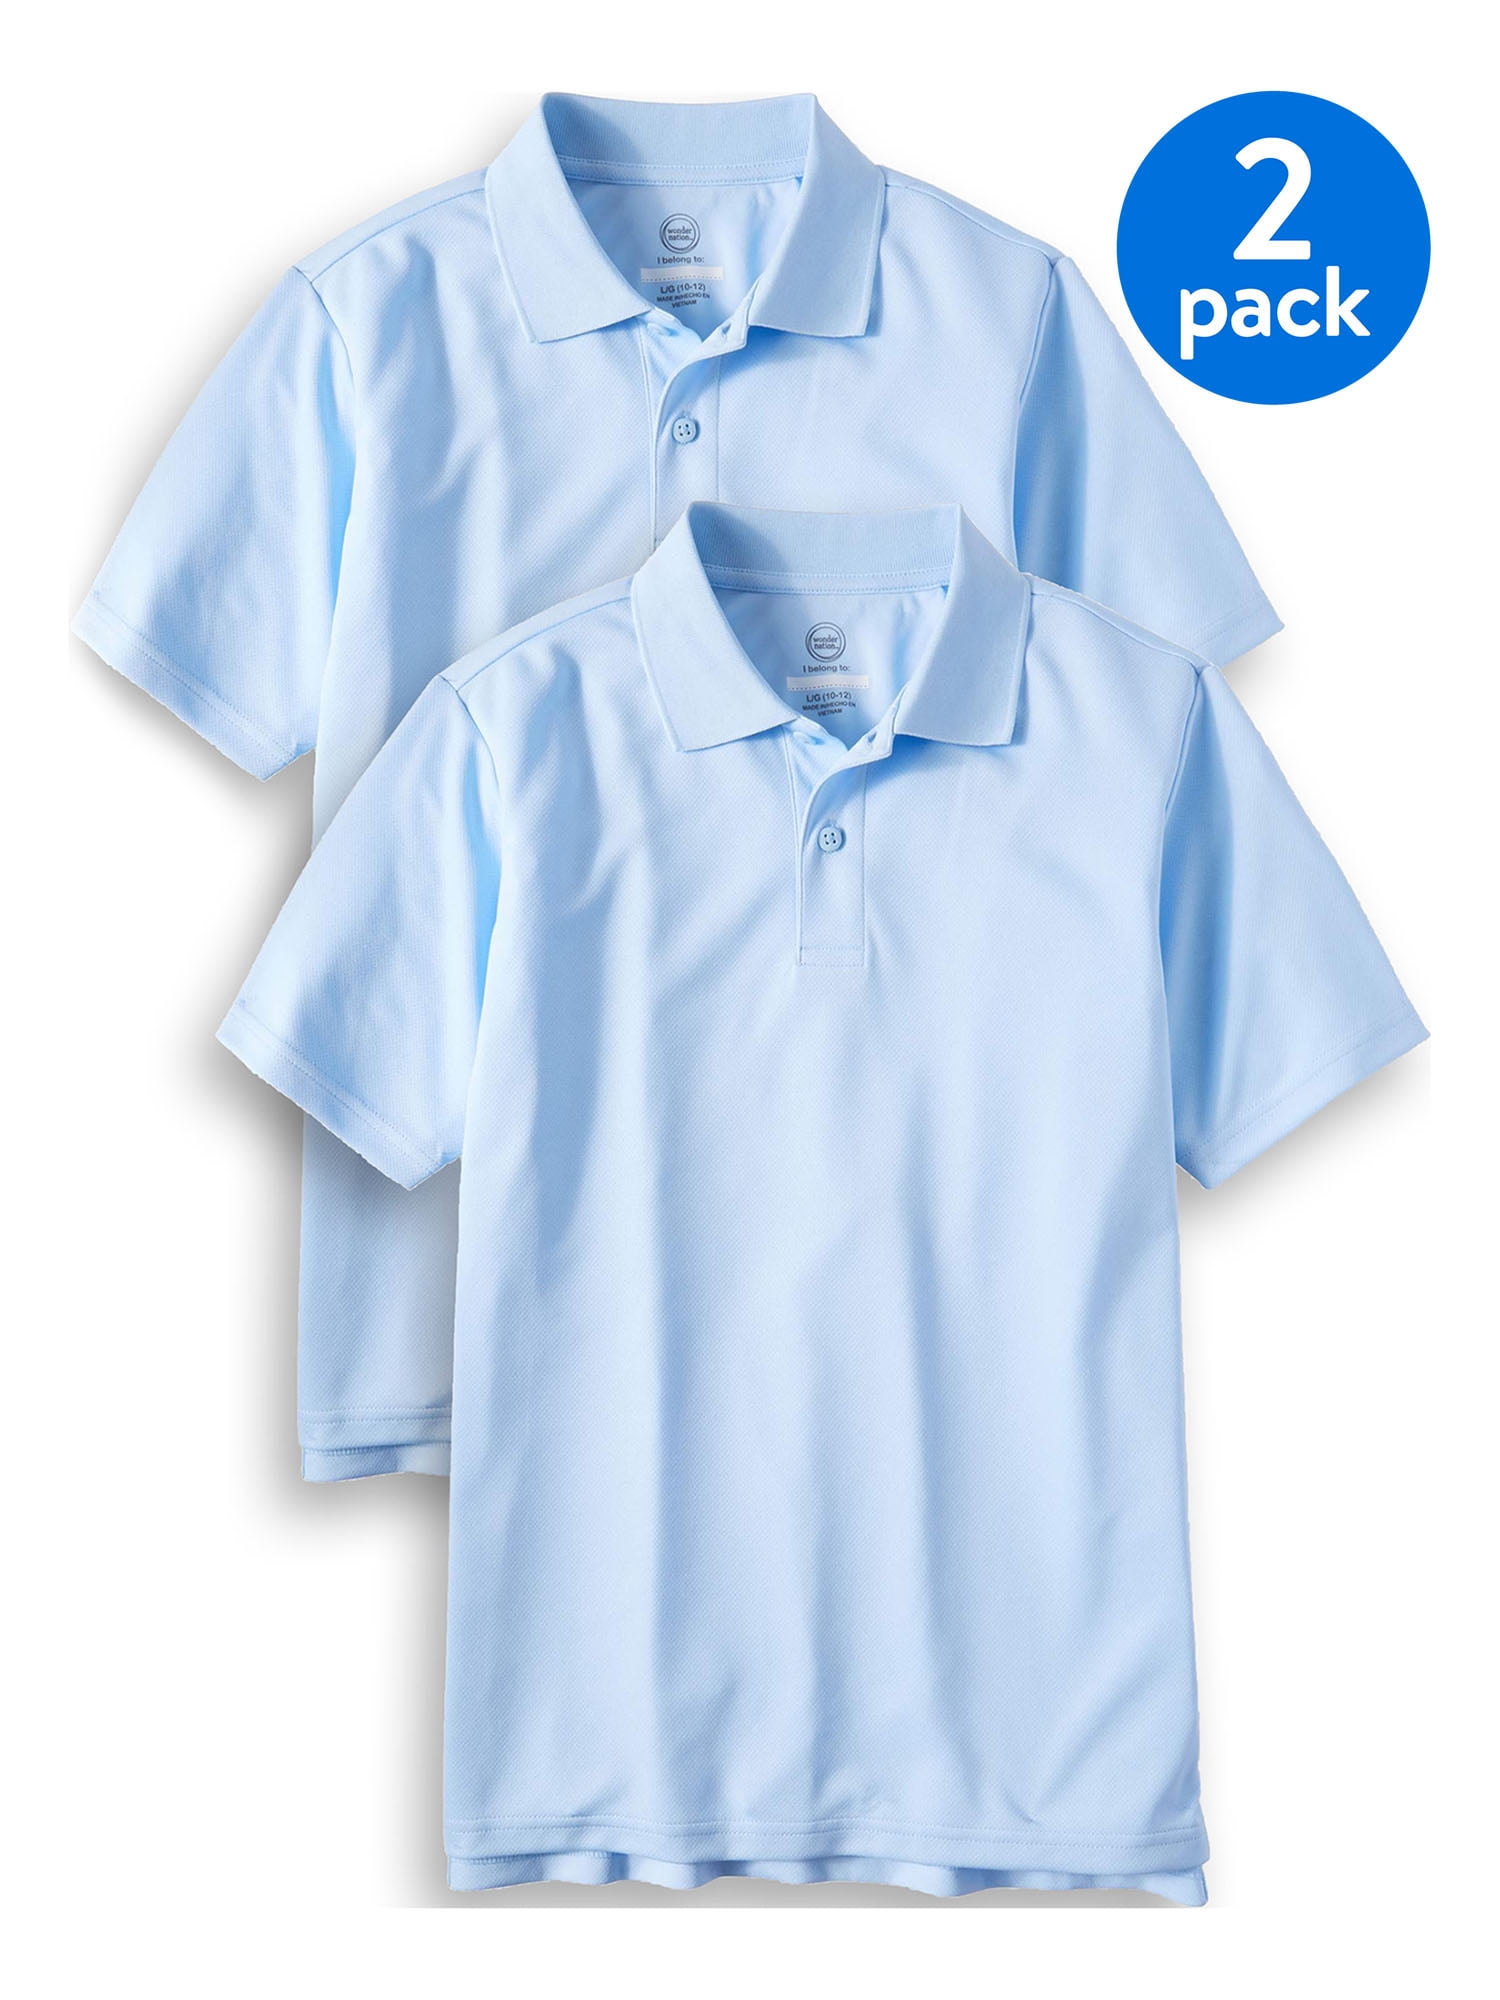 Boyoo Boys' 2 Pack Polo Shirts Short Sleeves School Uniform Shirts Active Performance Polo Tops for 6-15 Years Kids 